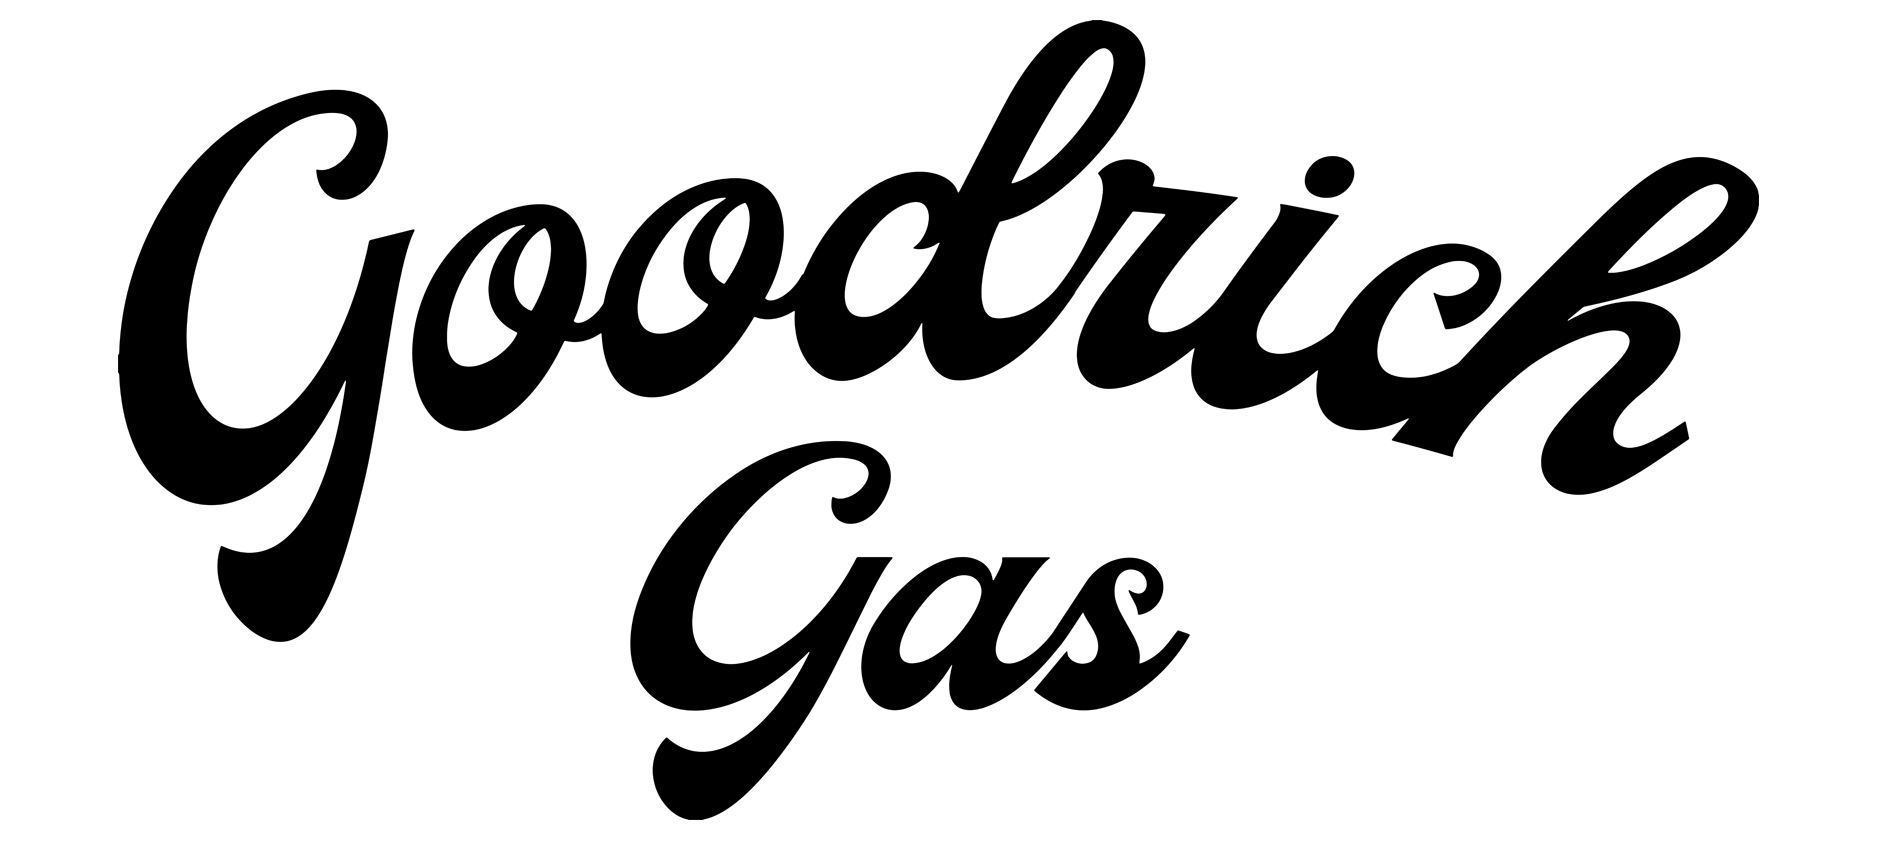 Goodrich Gas Logo